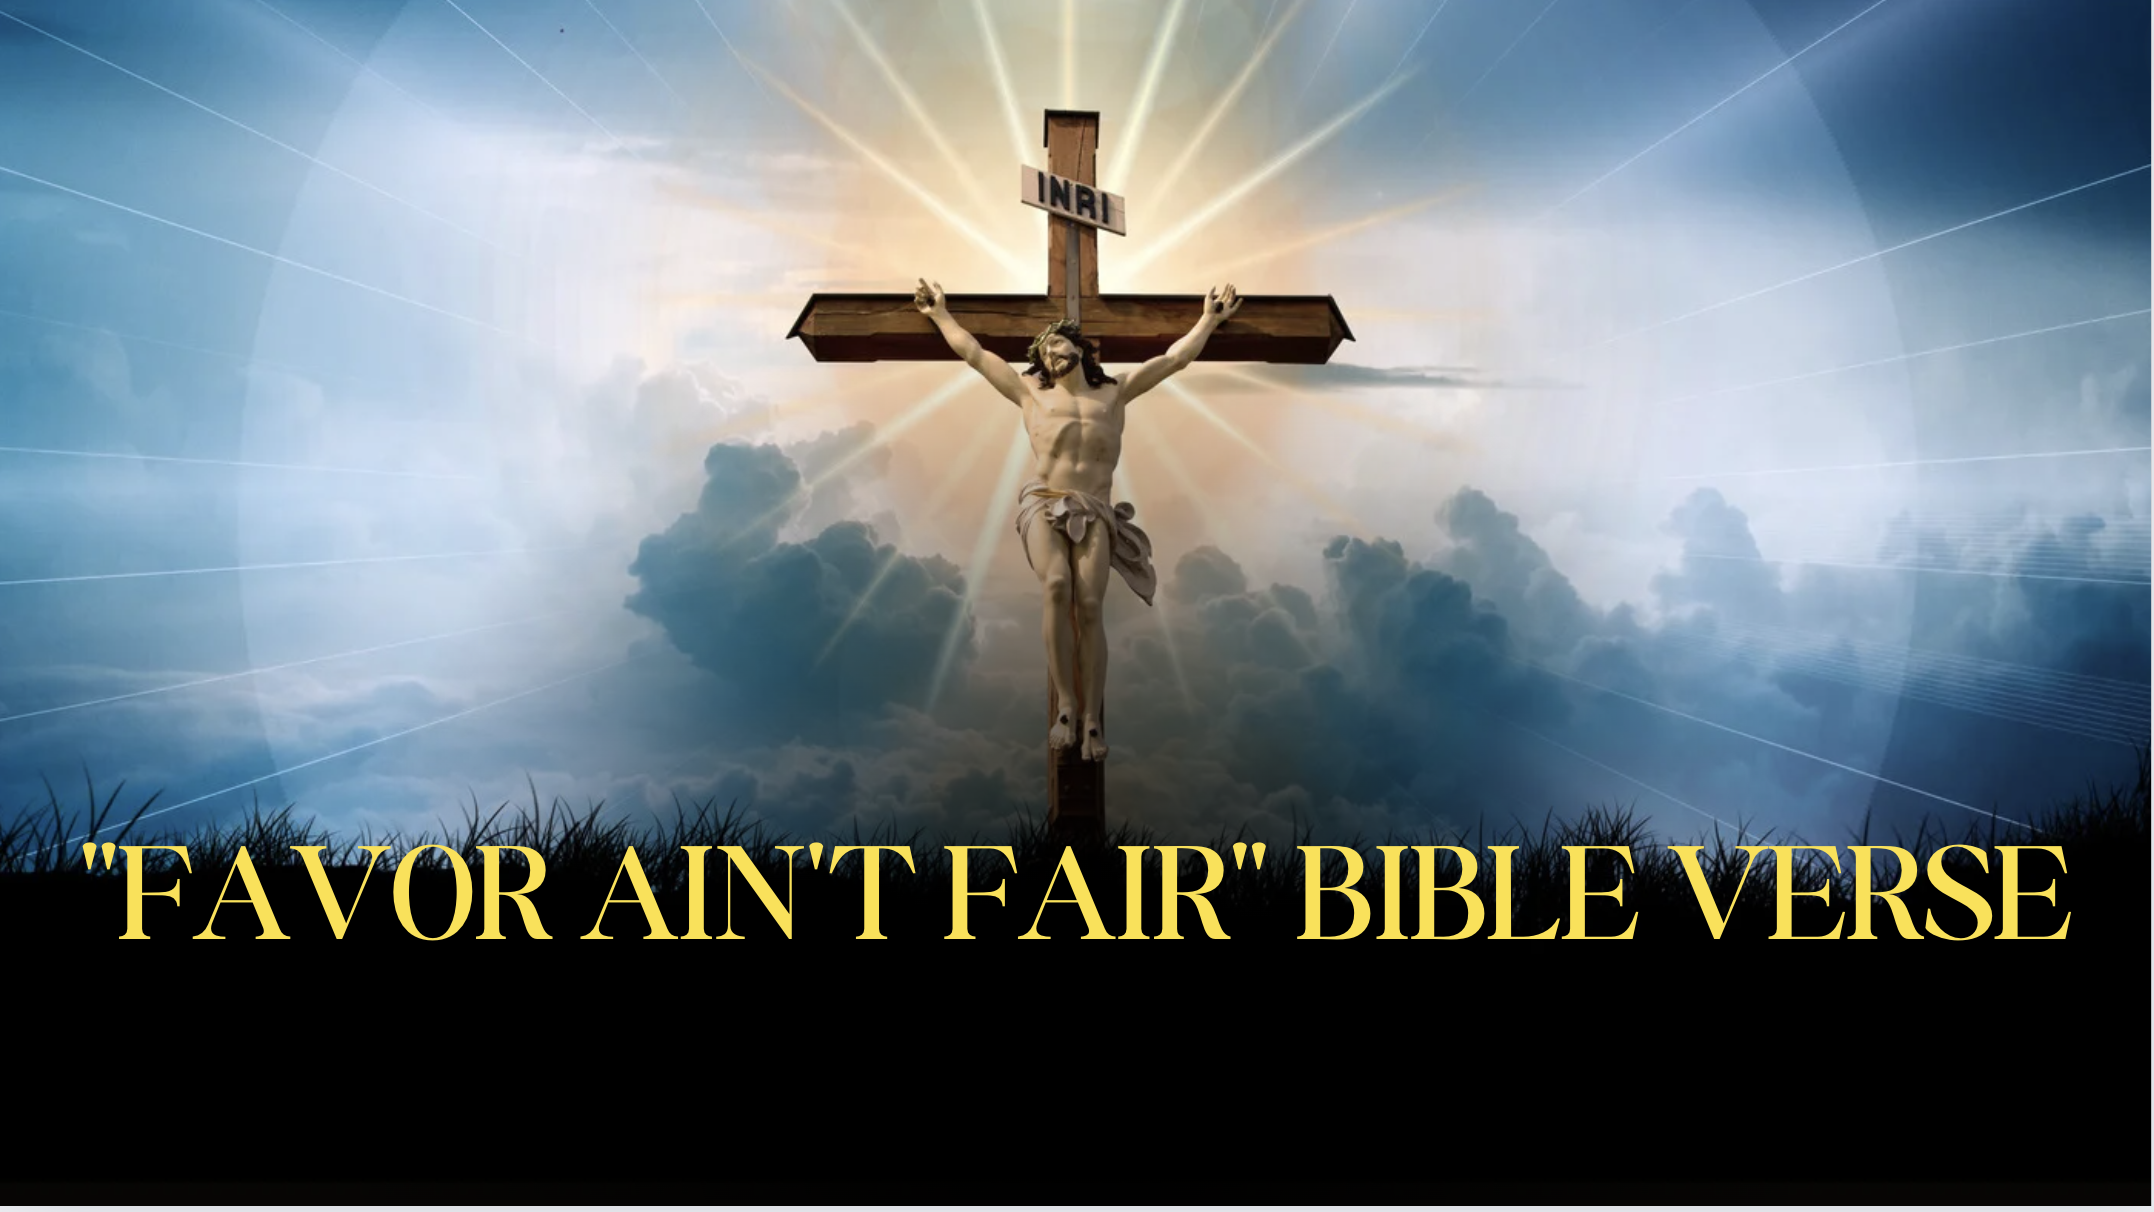 "Favor Ain't Fair" Bible Verse